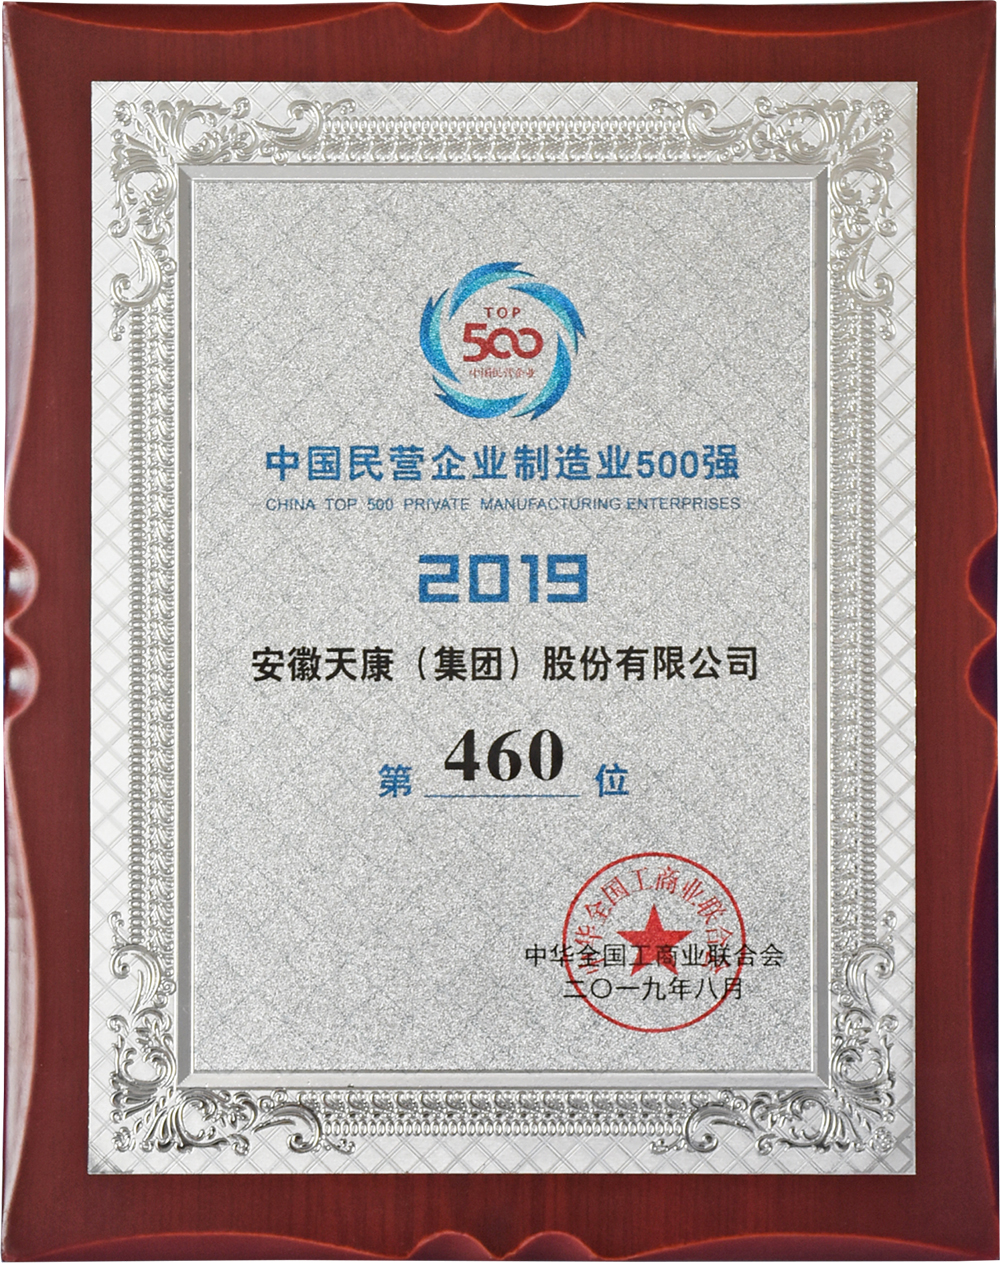 Top 500 private enterprises in China